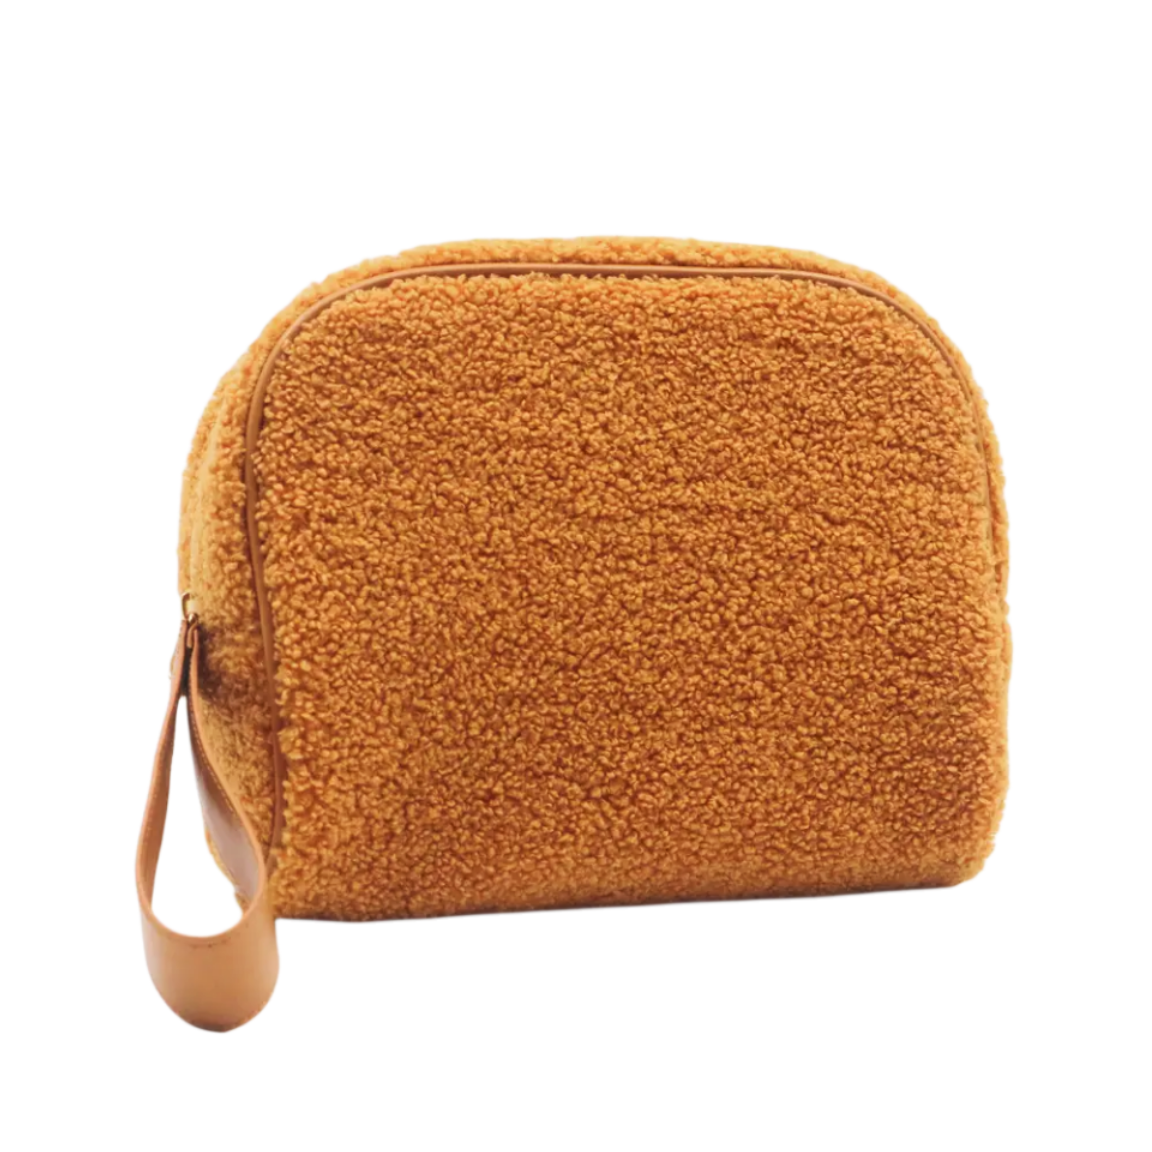 Fashion Sherpa Fleece Lamb Wool Cosmetic Bag Large Size Travel Toiletry Pouch Cute Teddy Fabric Makeup Bag